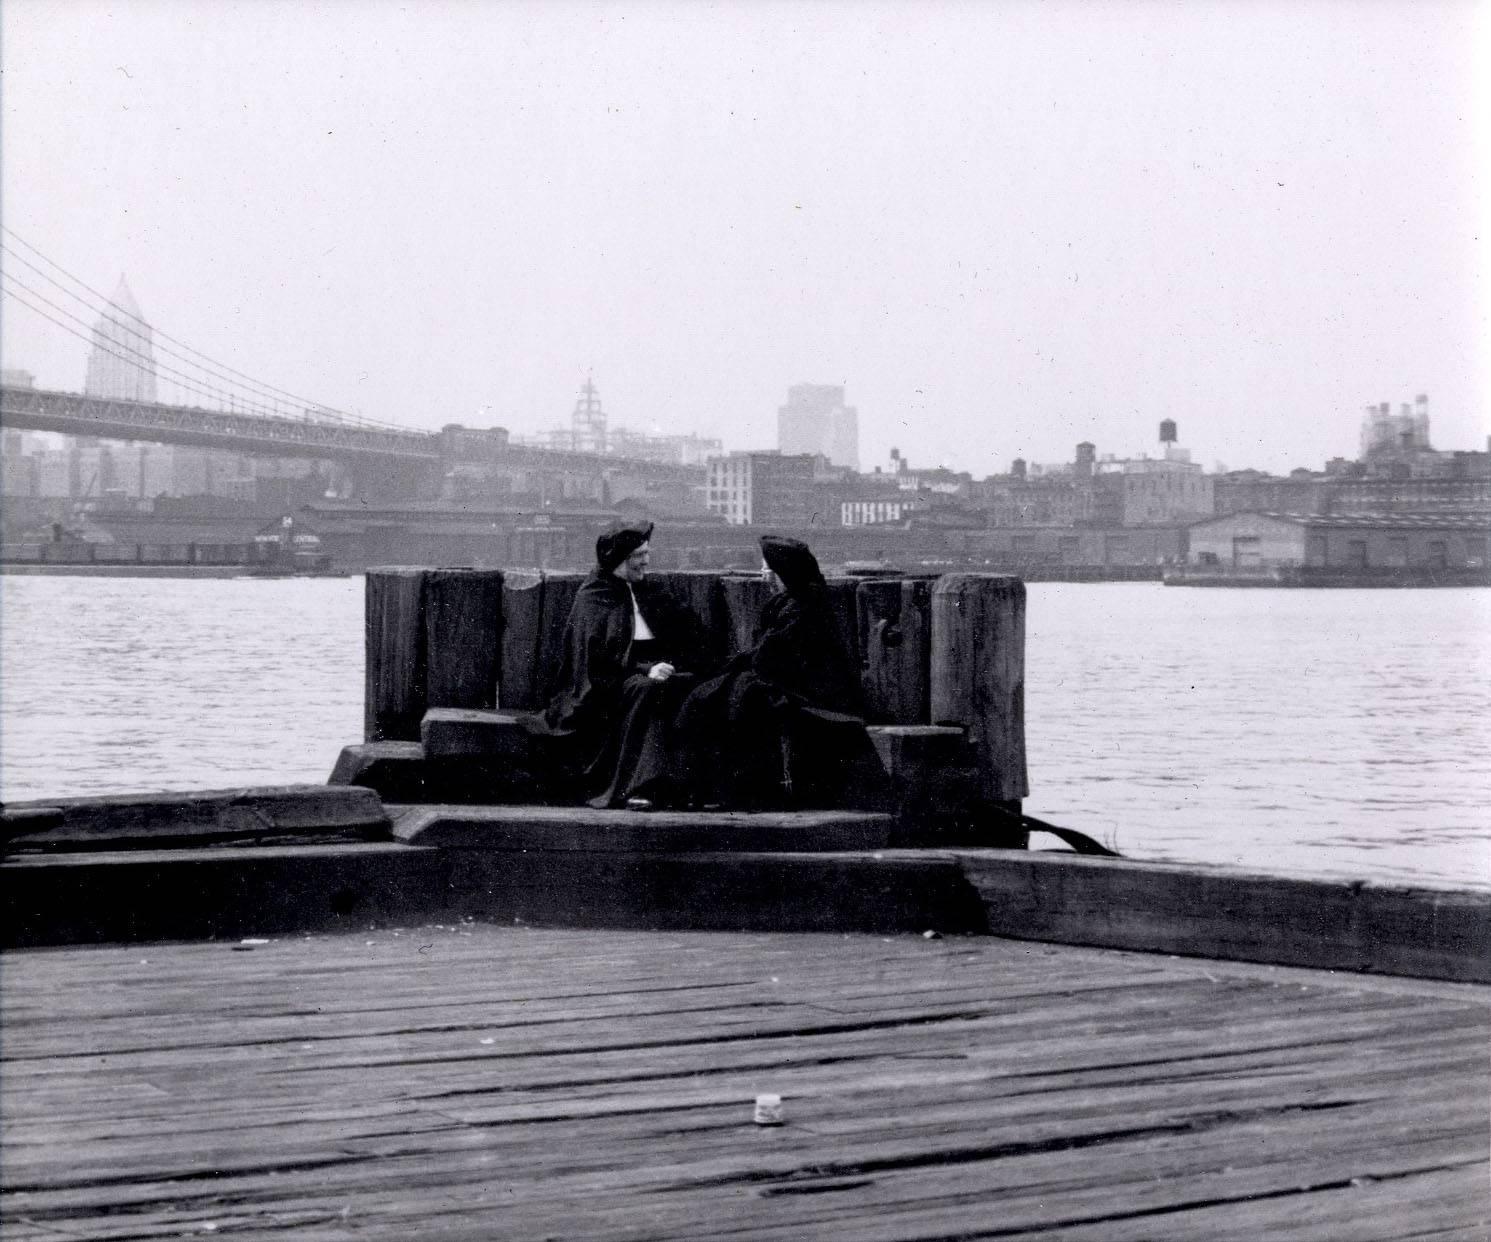 Helen Levitt Black and White Photograph - East River (two nuns)